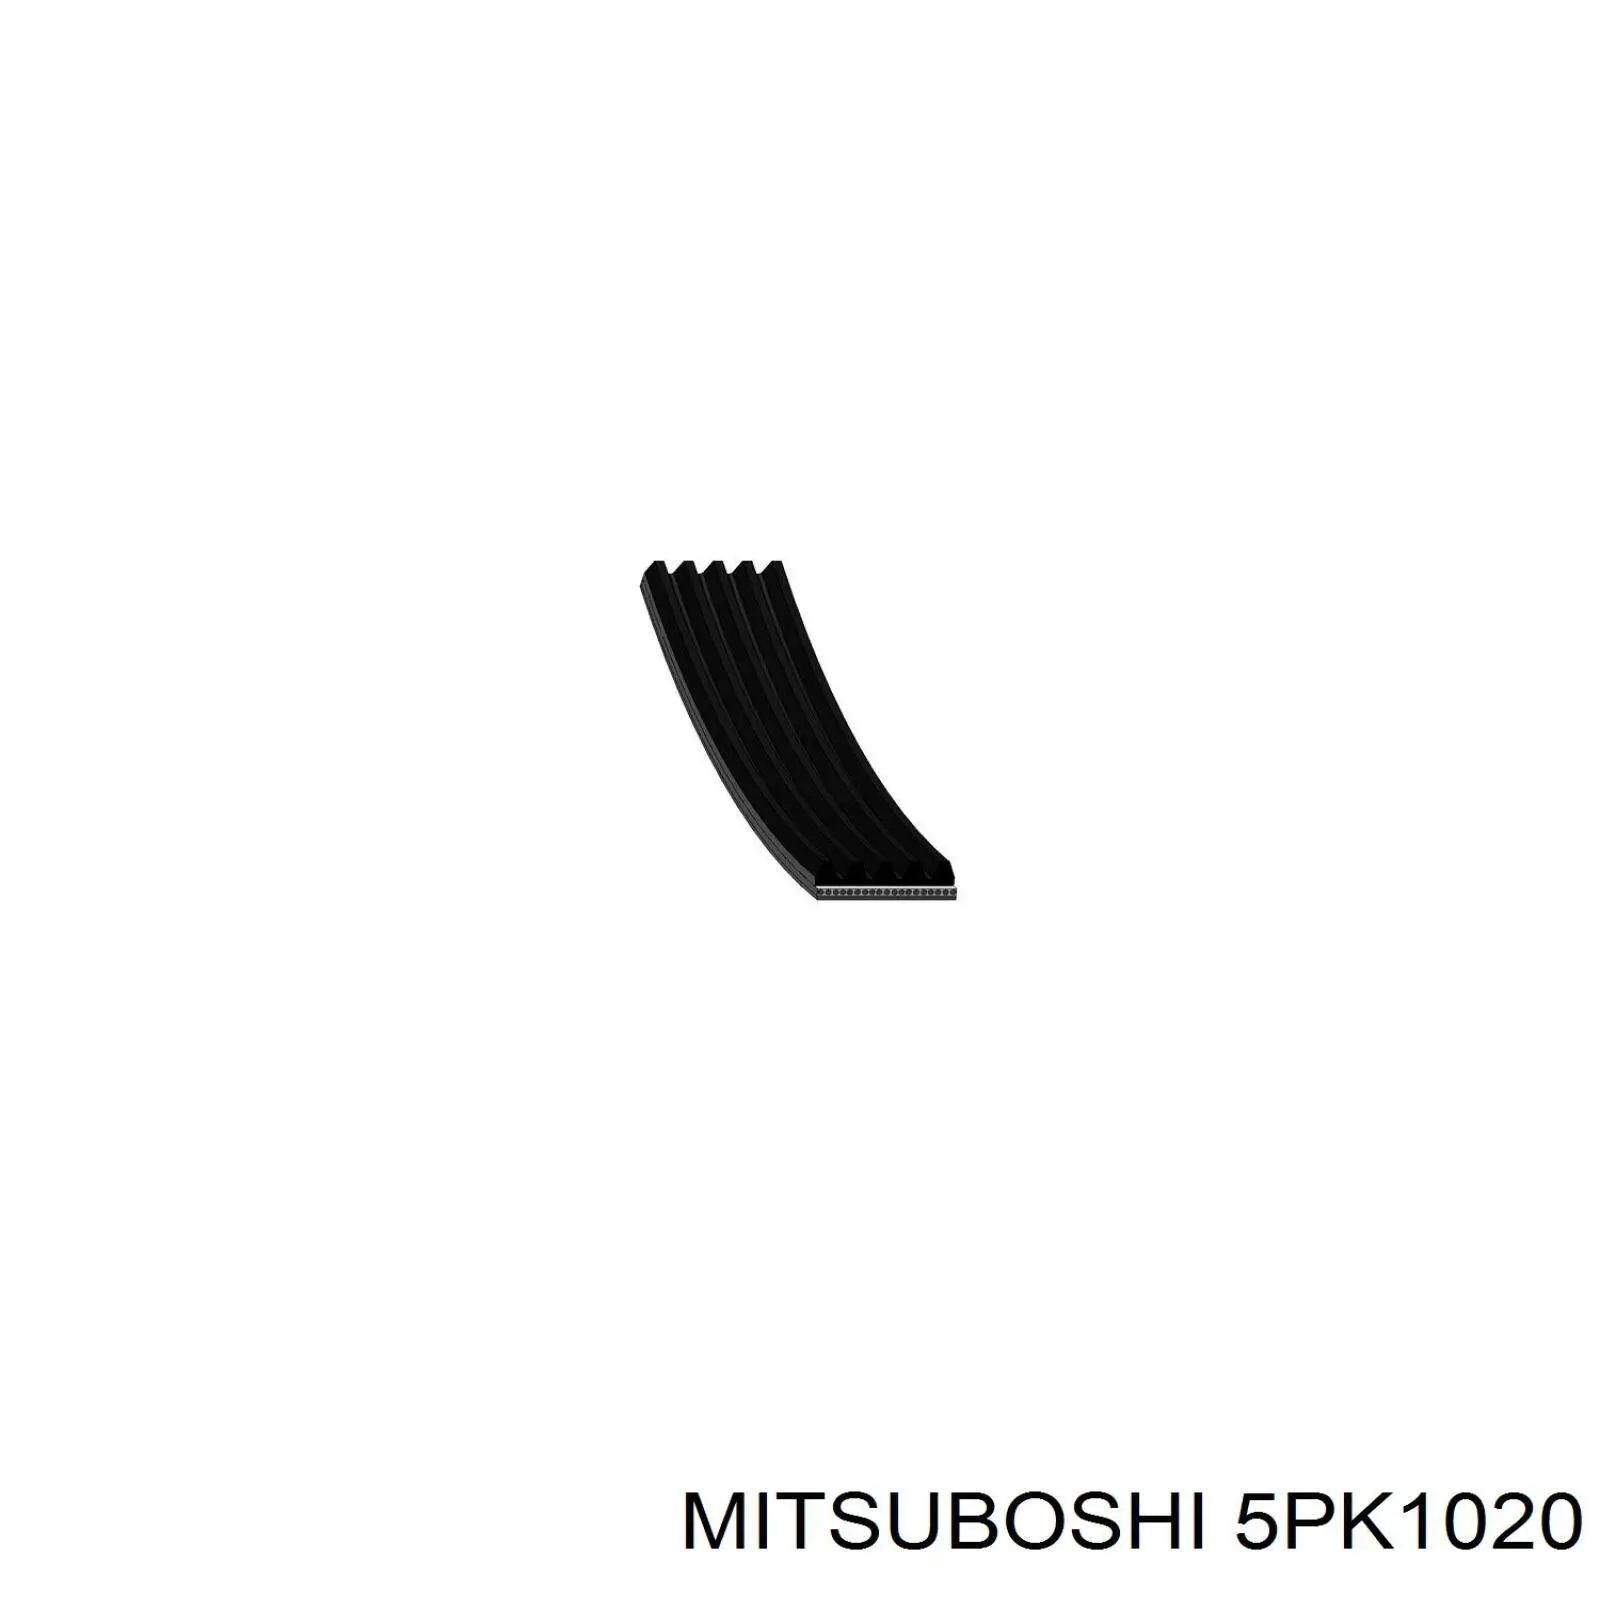 5PK1020 Mitsuboshi correa trapezoidal